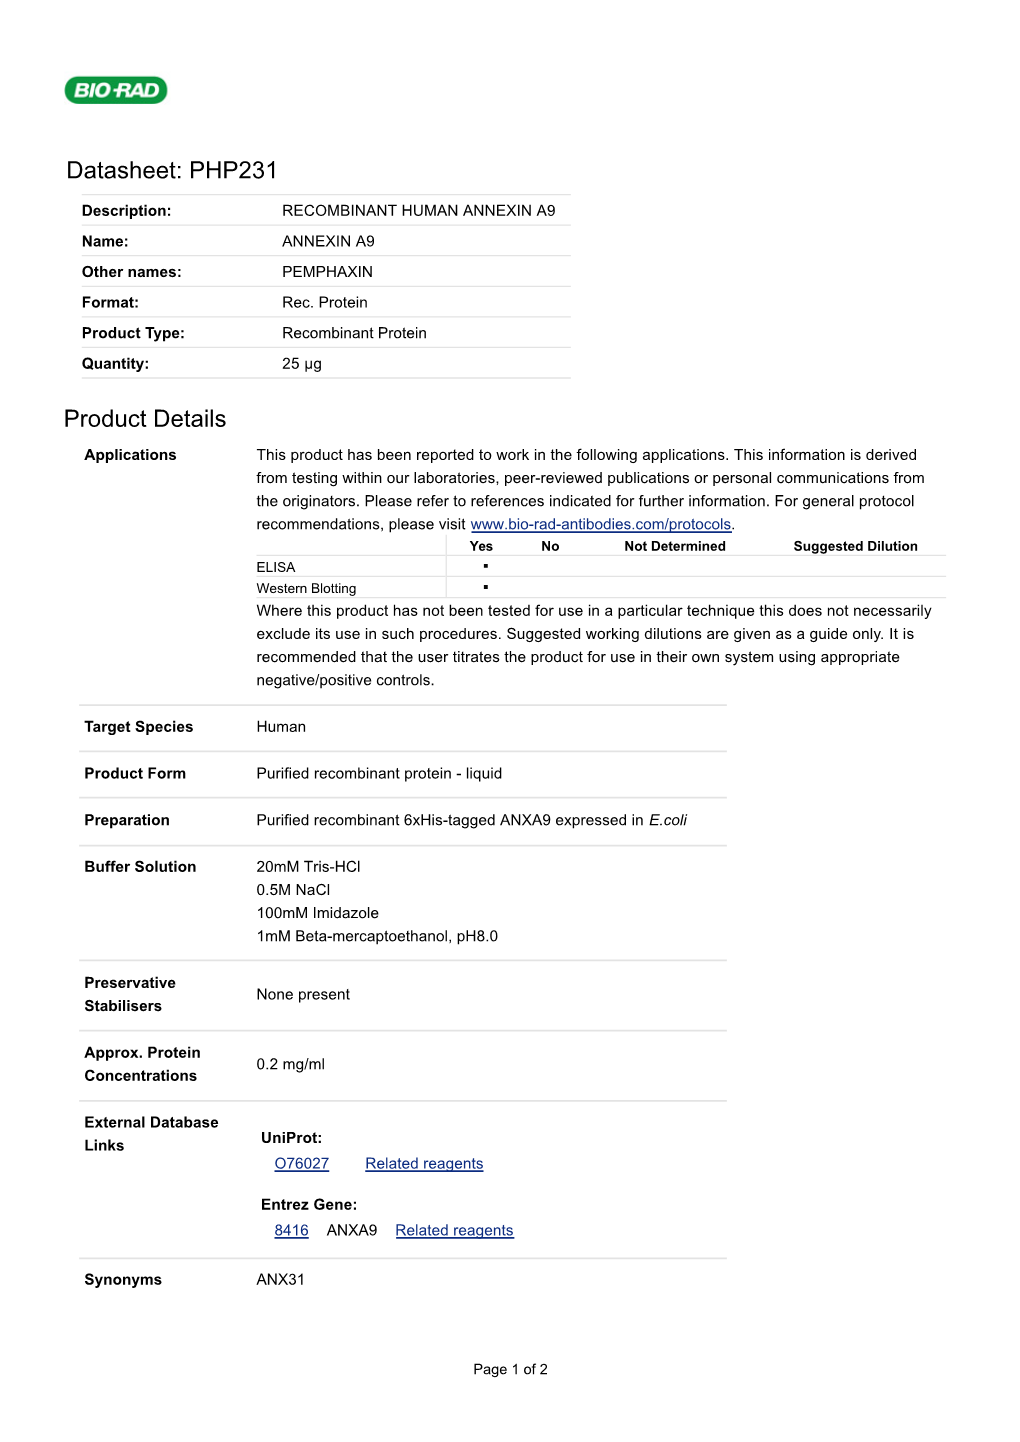 Datasheet: PHP231 Product Details